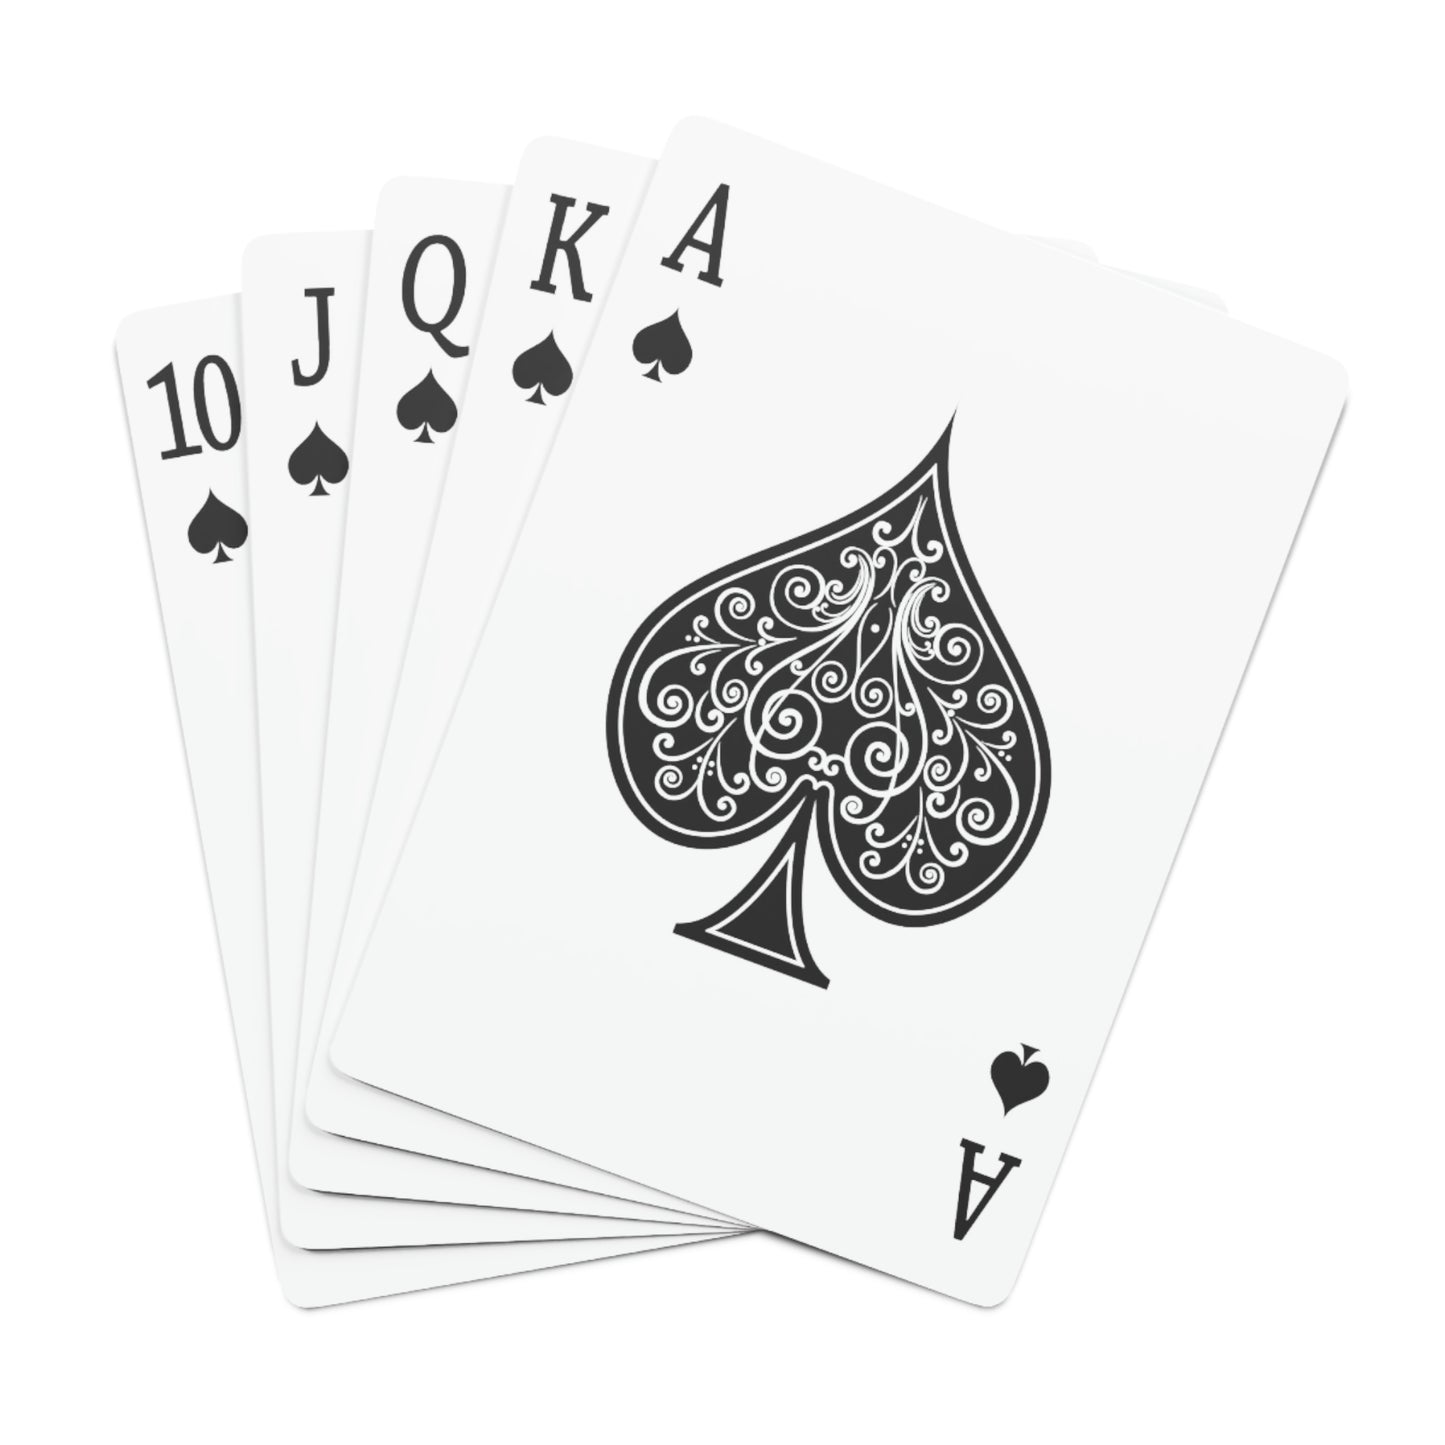 UAP (UFO) Abduction Poker Cards